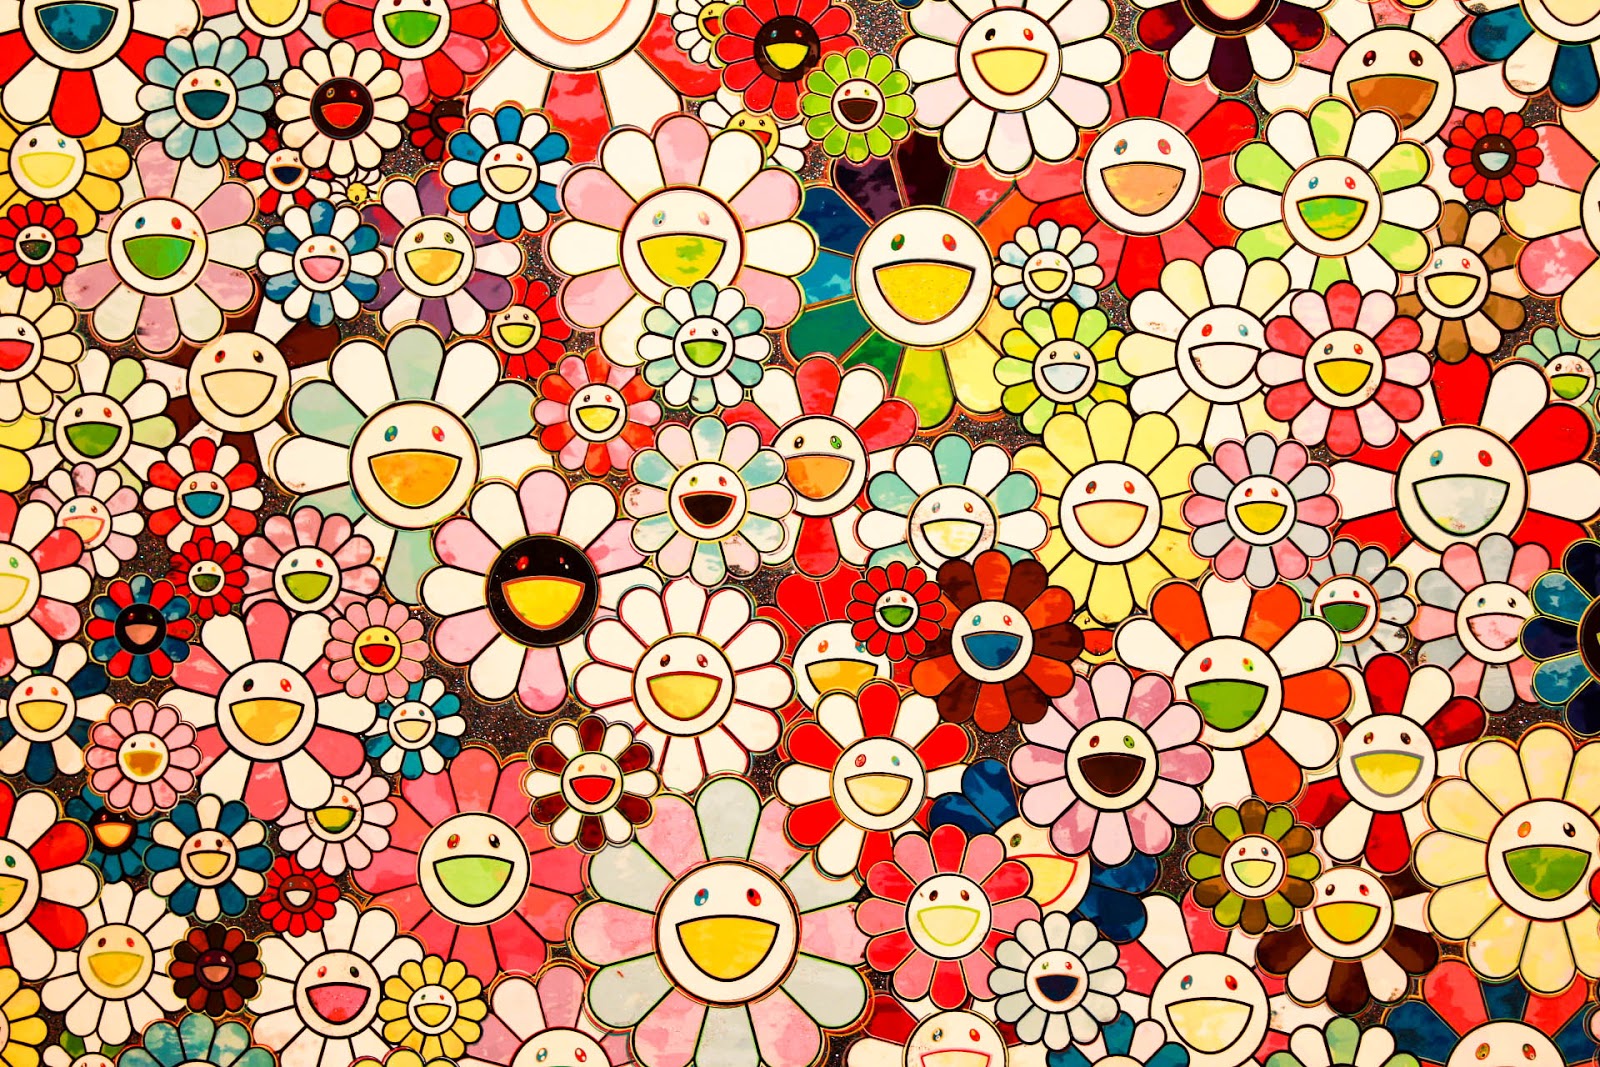 Just a shot away: Takashi Murakami: Flowers and Skulls